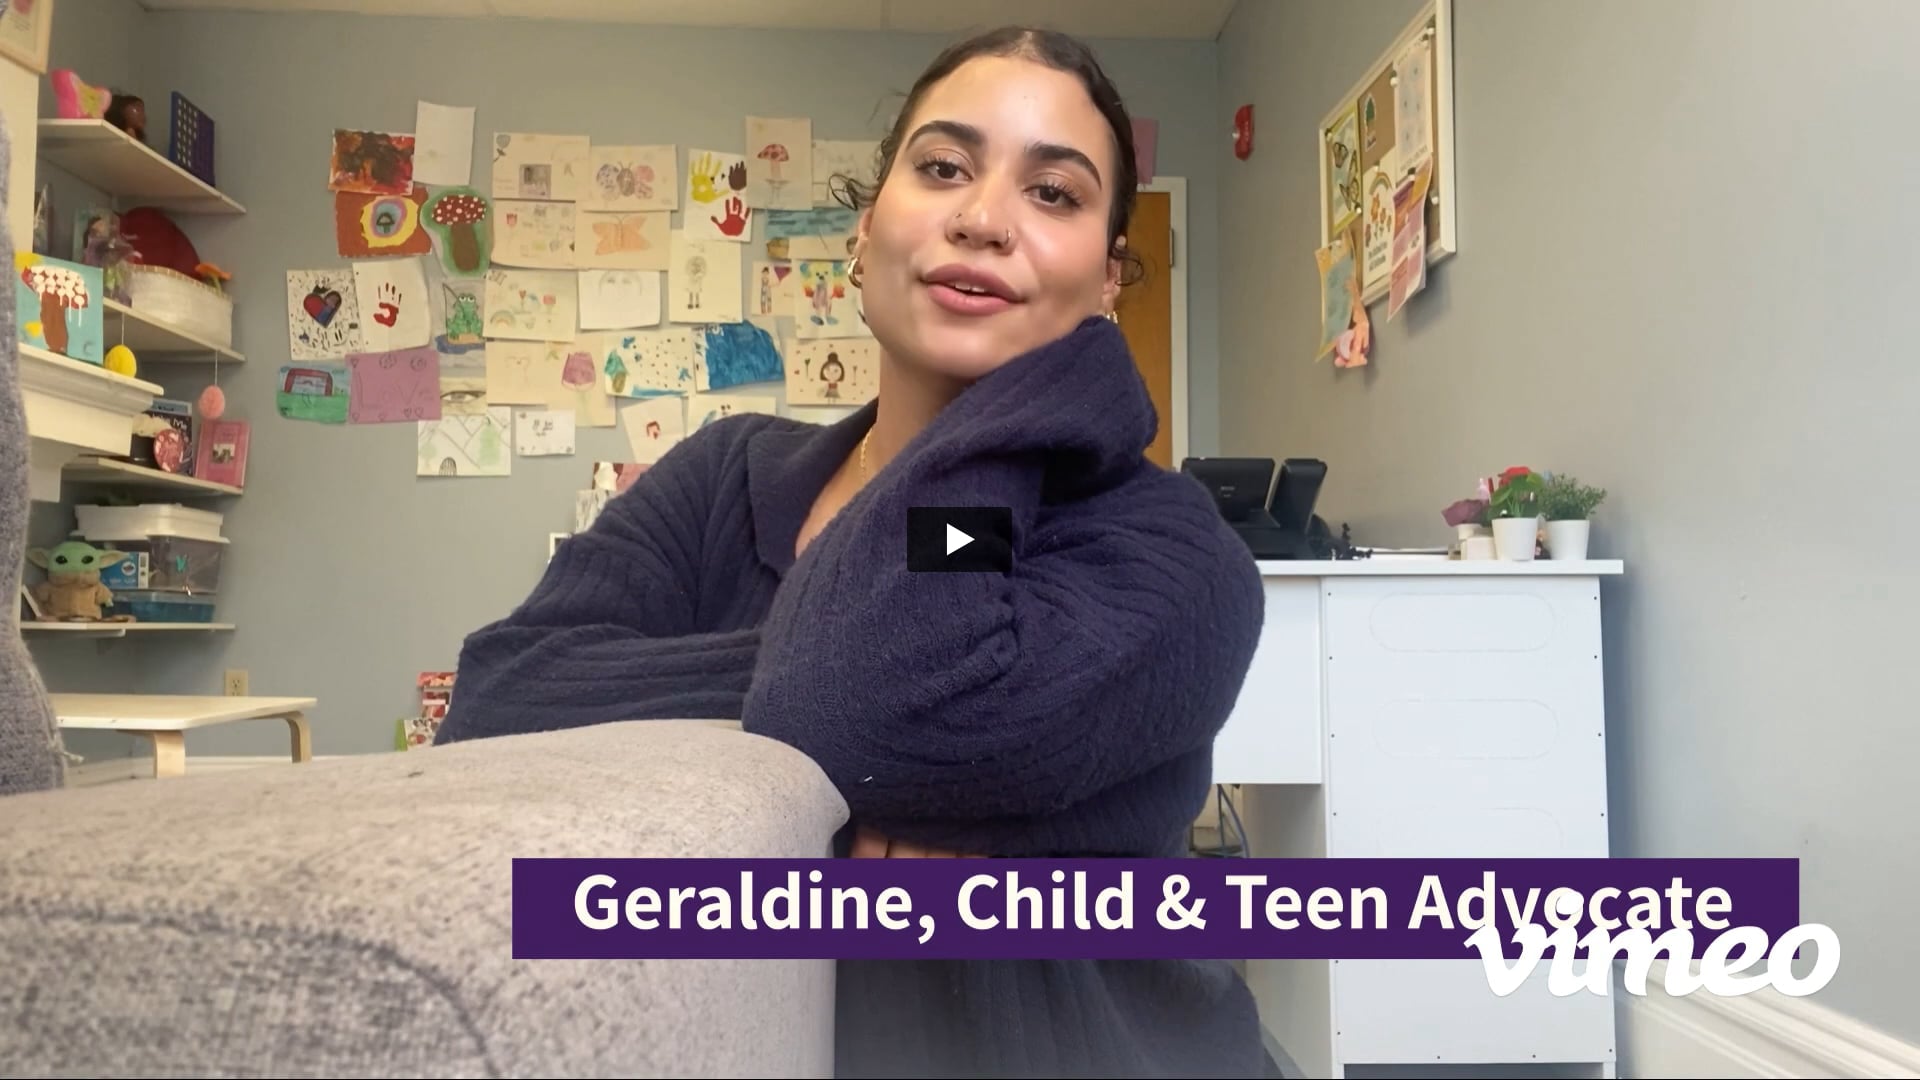 Meet Geraldine, Child & Teen Advocate at Turning Point